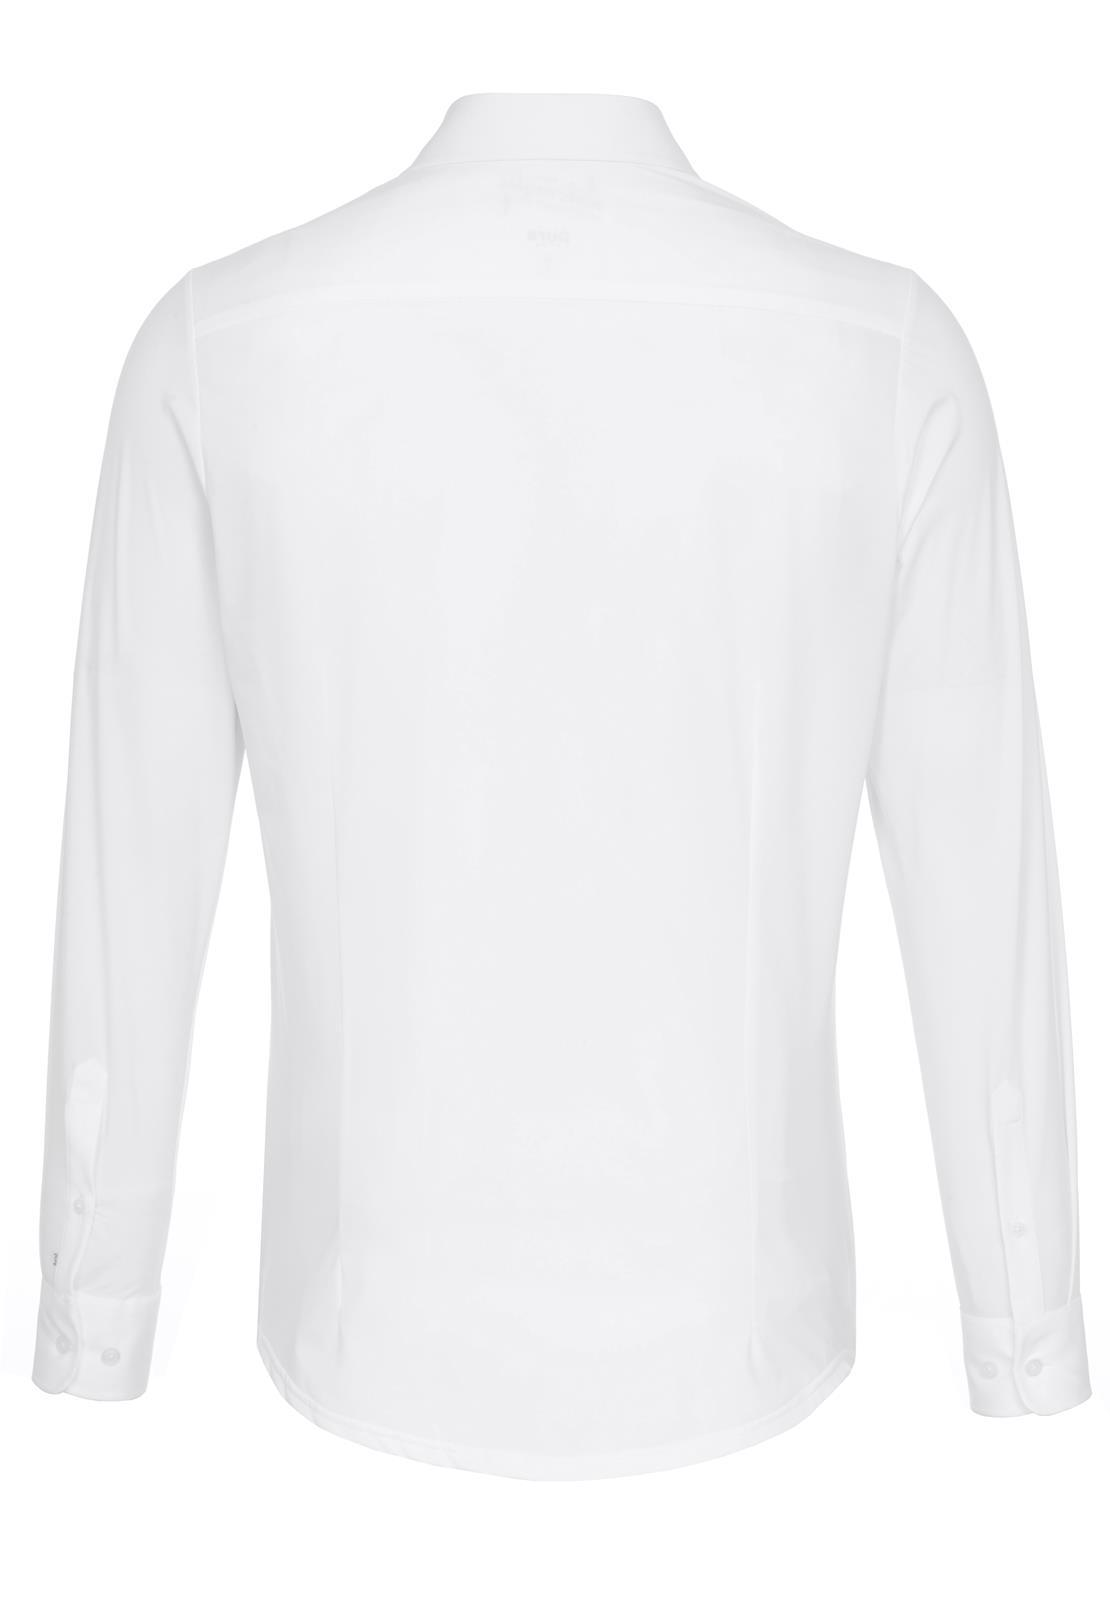 PURE- Functional Hemd Langarm (Uni Weiß)